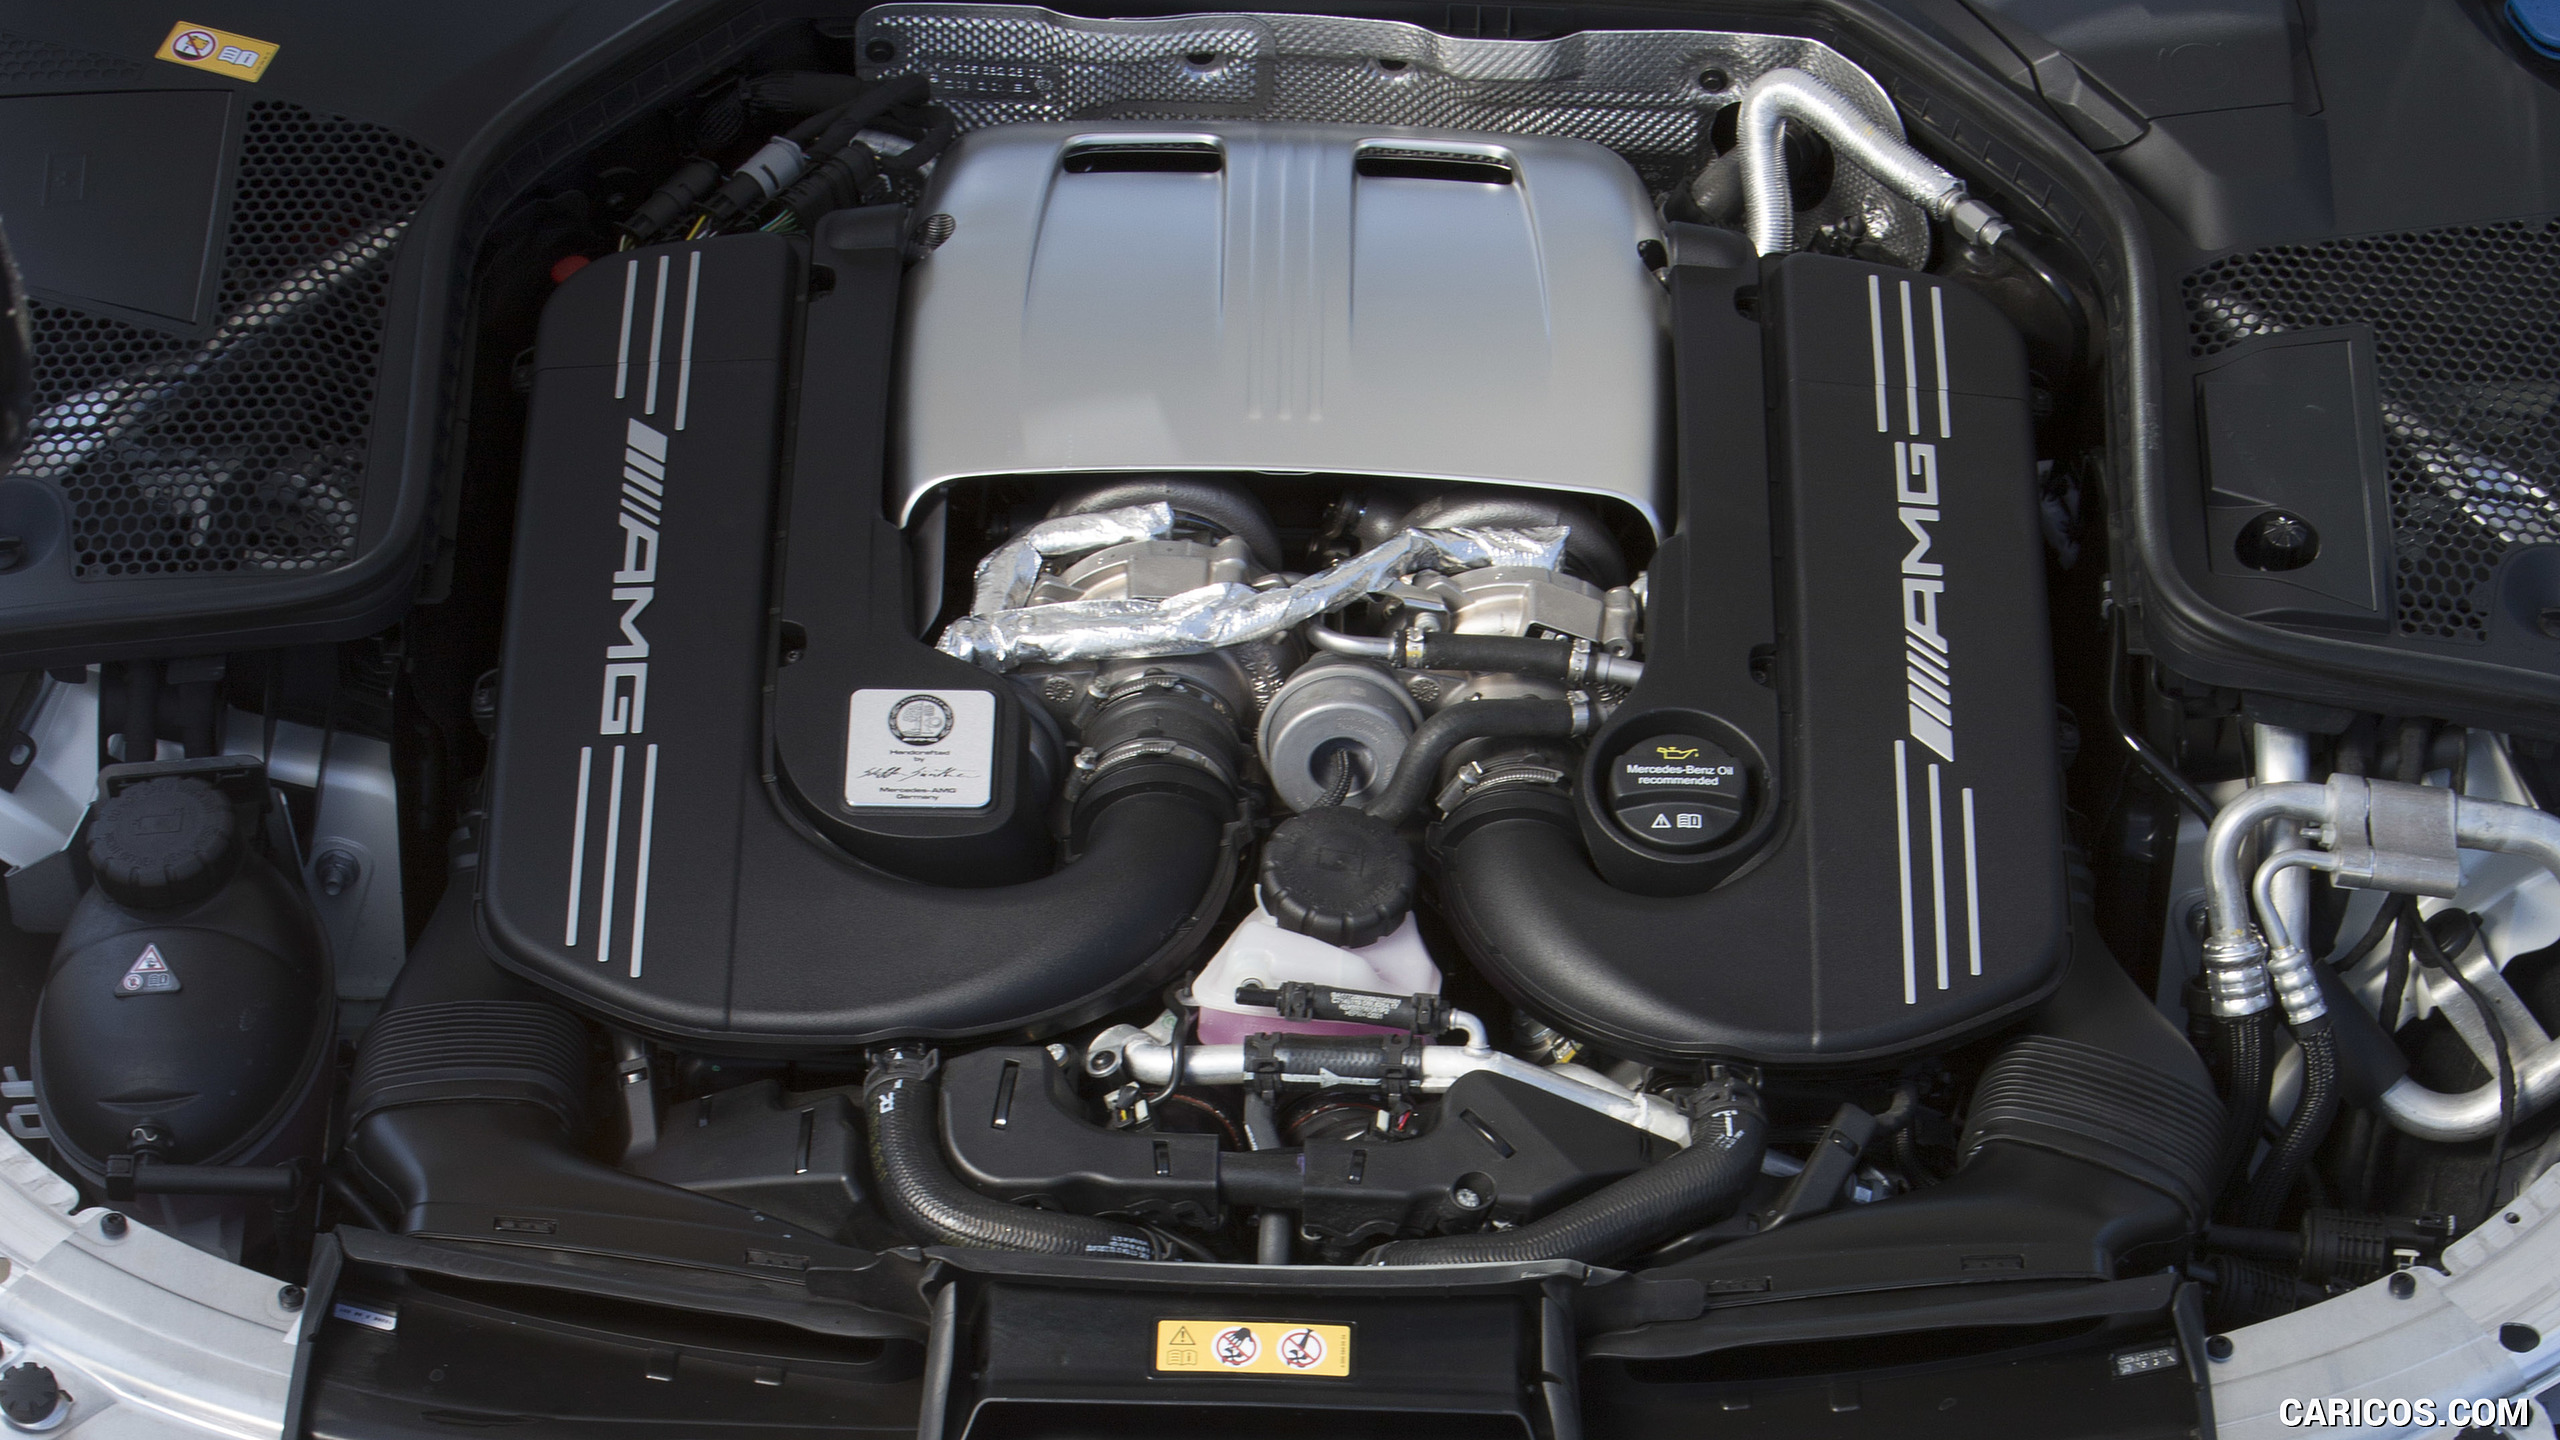 2017 Mercedes-AMG C63 S Cabriolet - Engine, #141 of 222